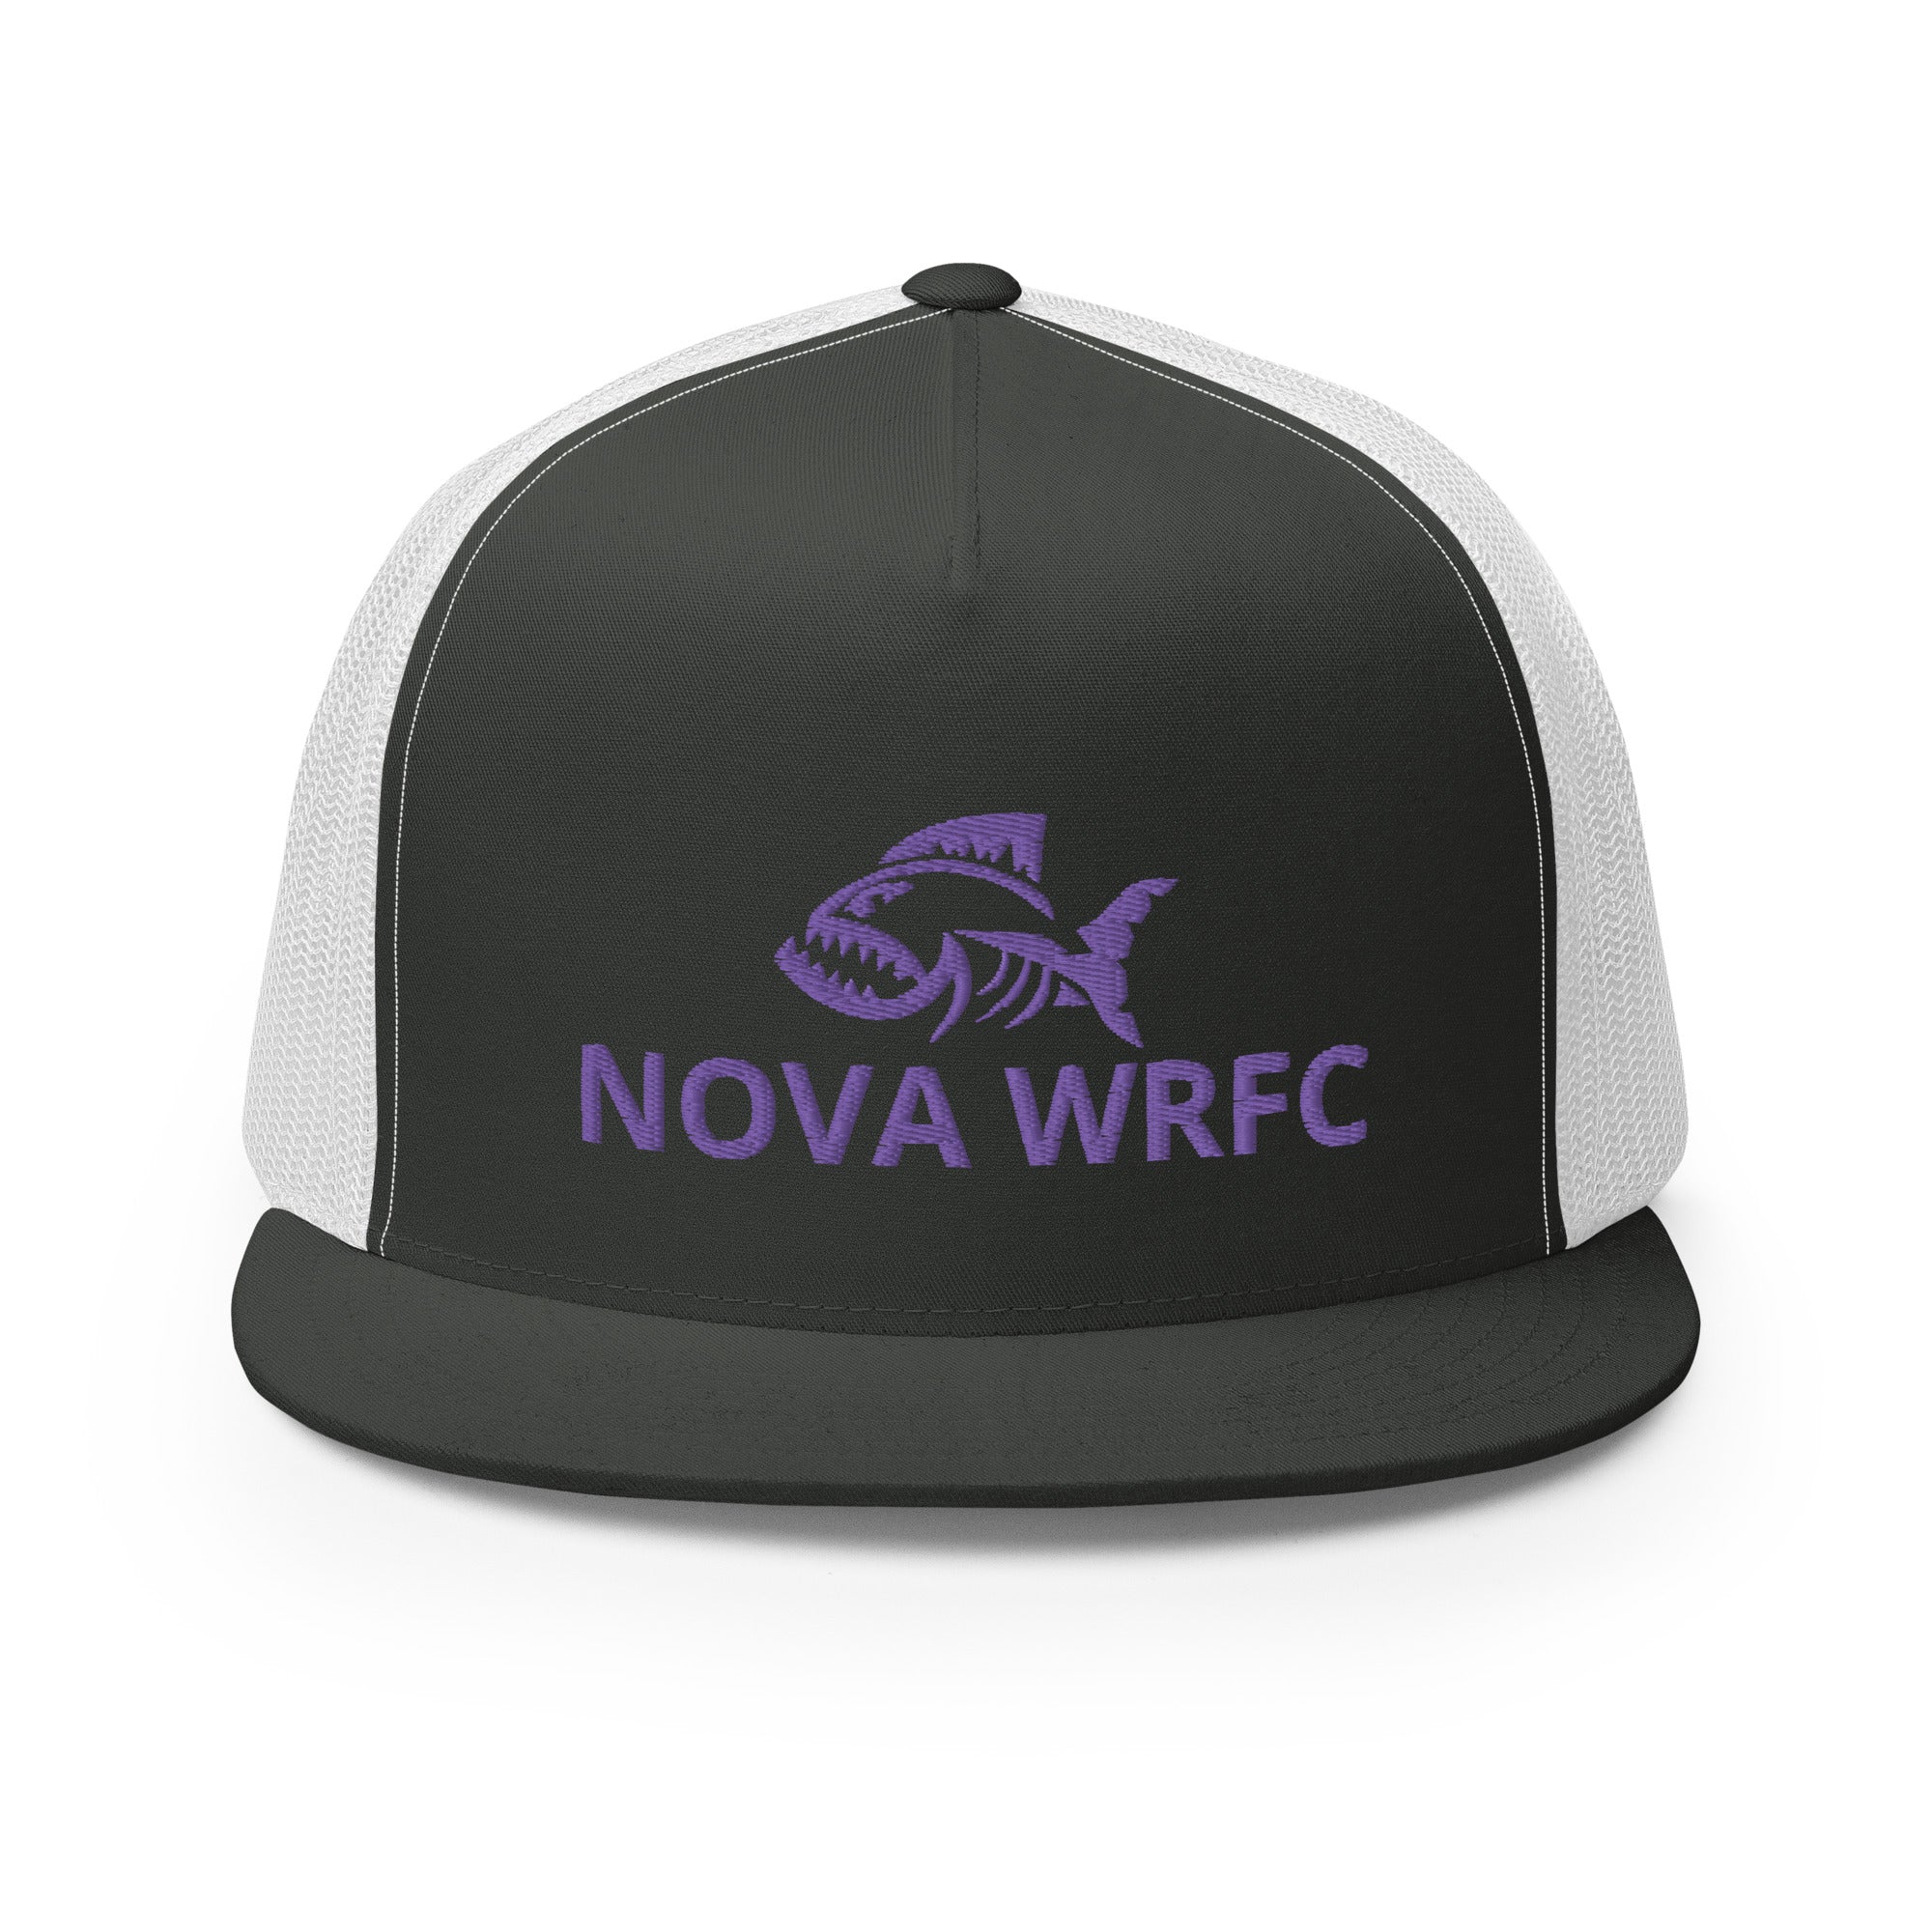 Rugby Imports NOVA WRFC Trucker Cap